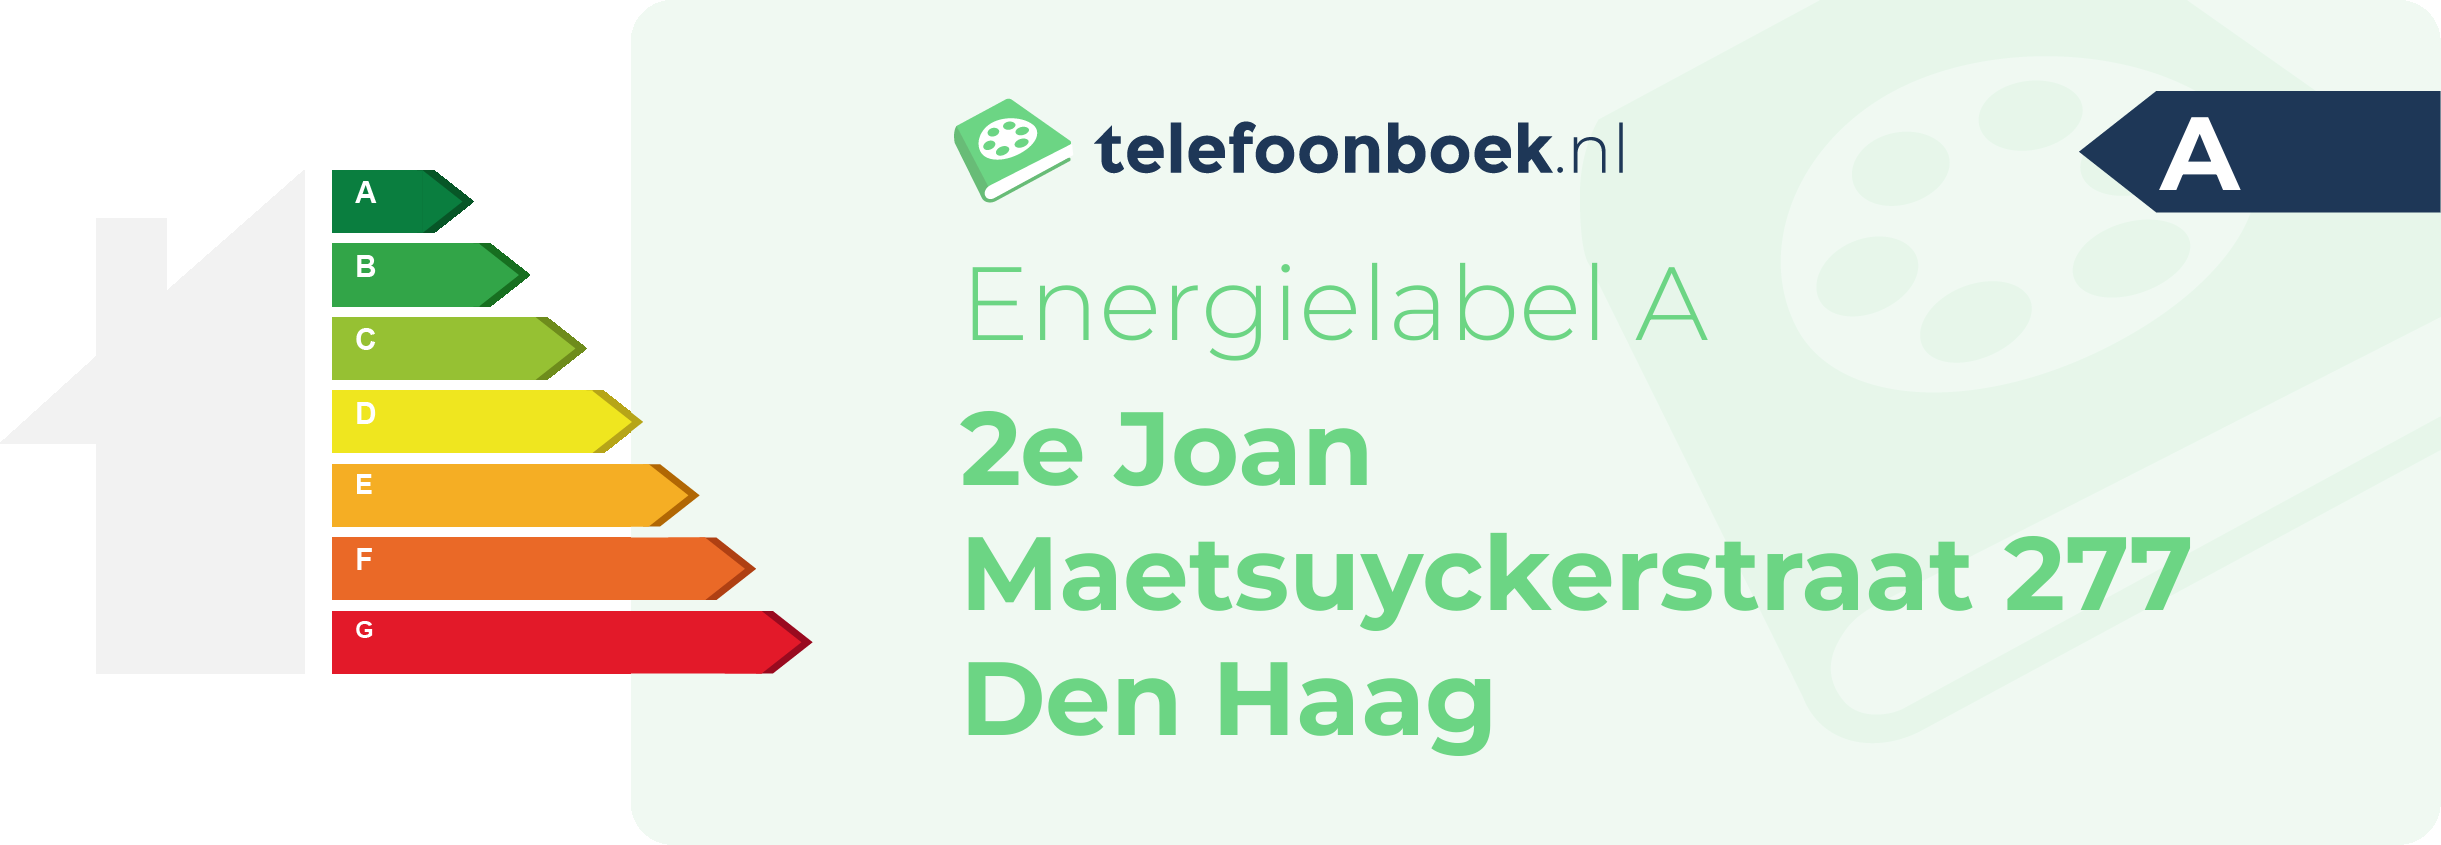 Energielabel 2e Joan Maetsuyckerstraat 277 Den Haag